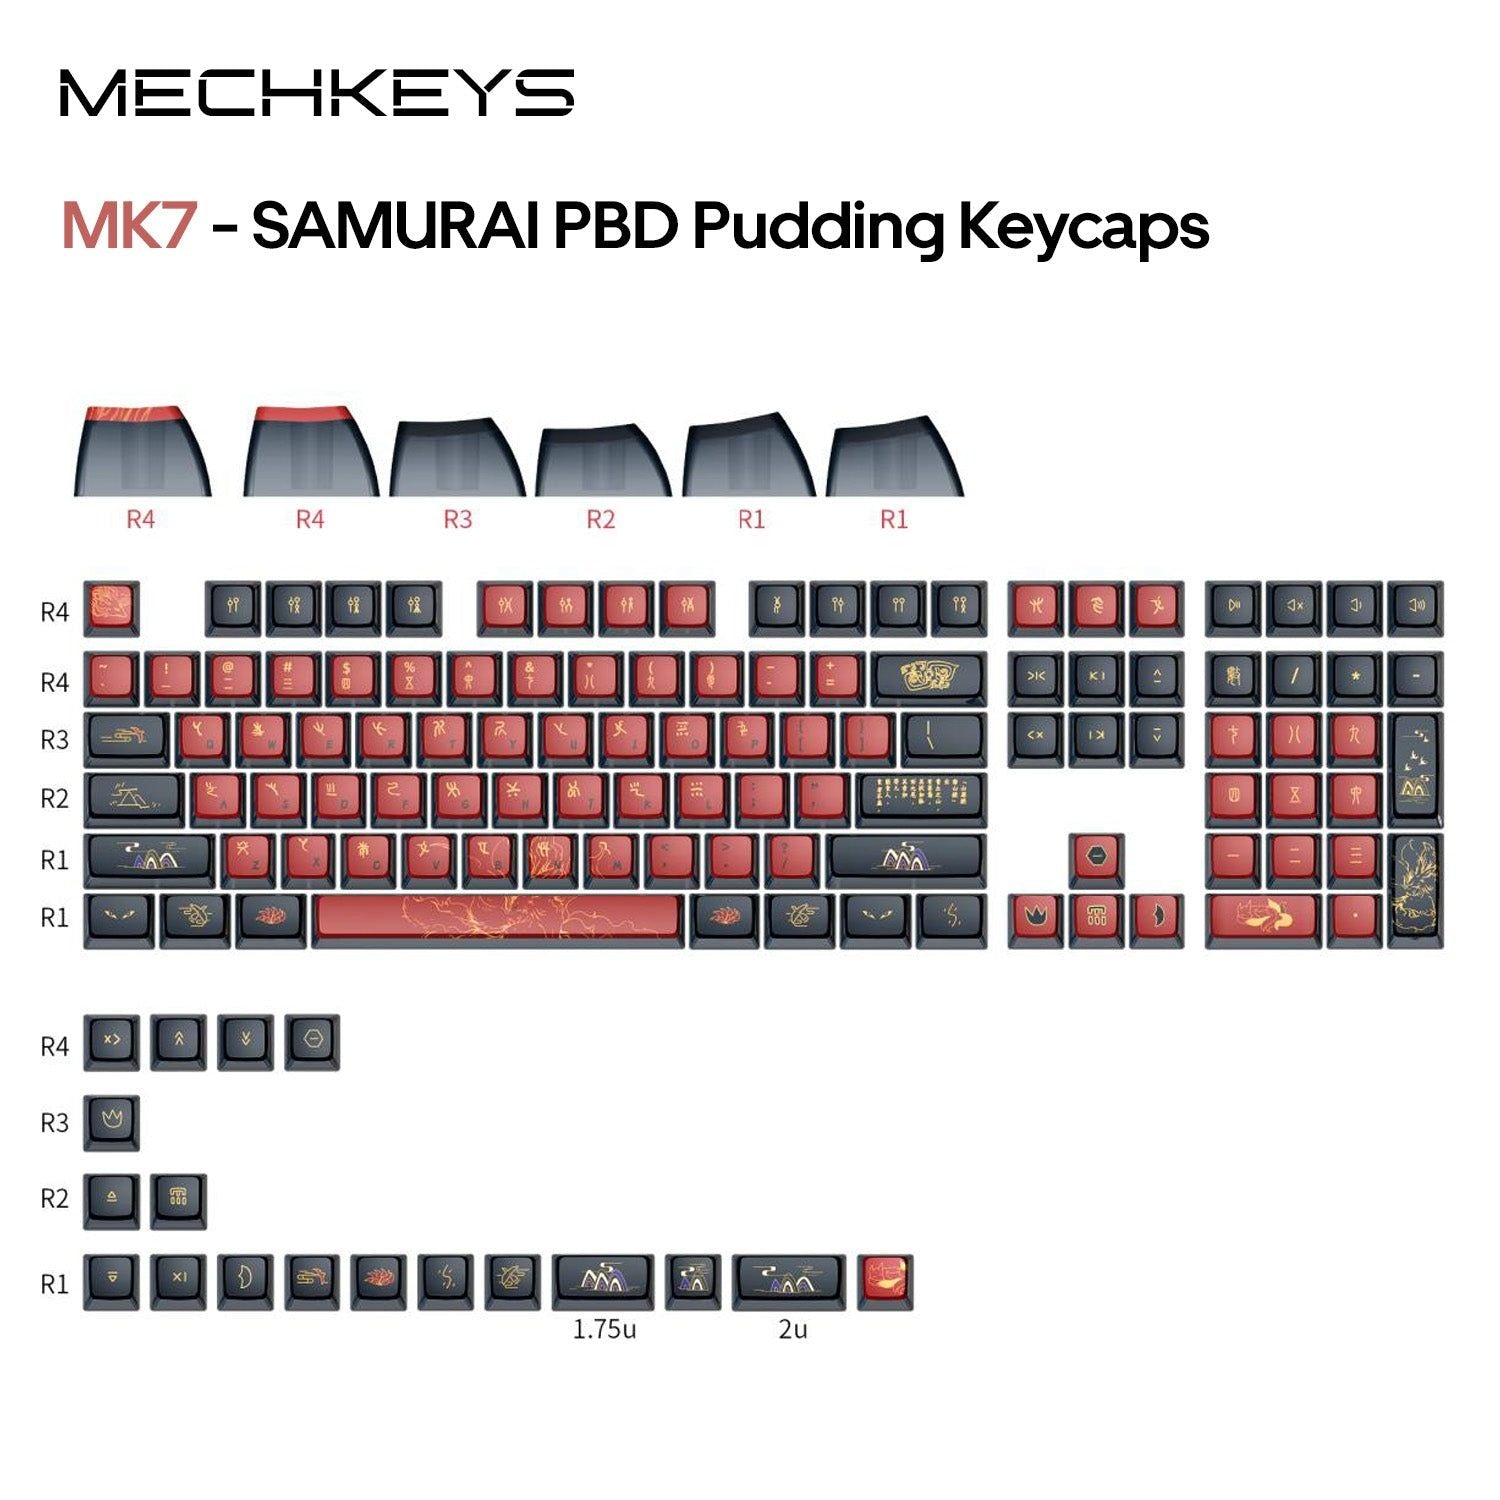 OVERCLOCK MECHKEYS SAMURAI PBT Pudding Keycaps - OVERCLOCK Computer